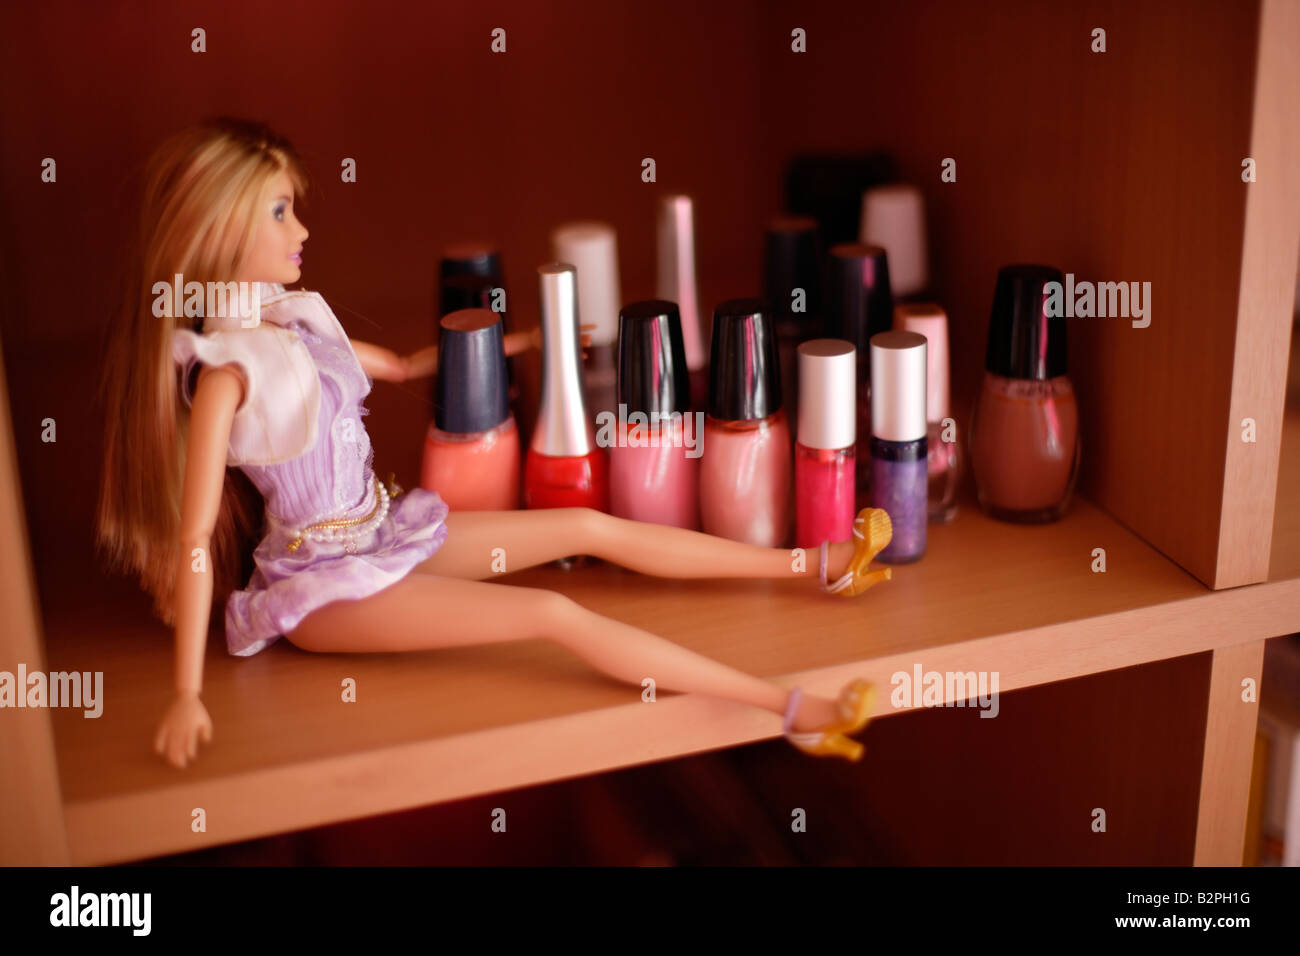 Barbie-Puppe Serie Barbie bewundert ihre Nagellack-Kollektion Stockfoto